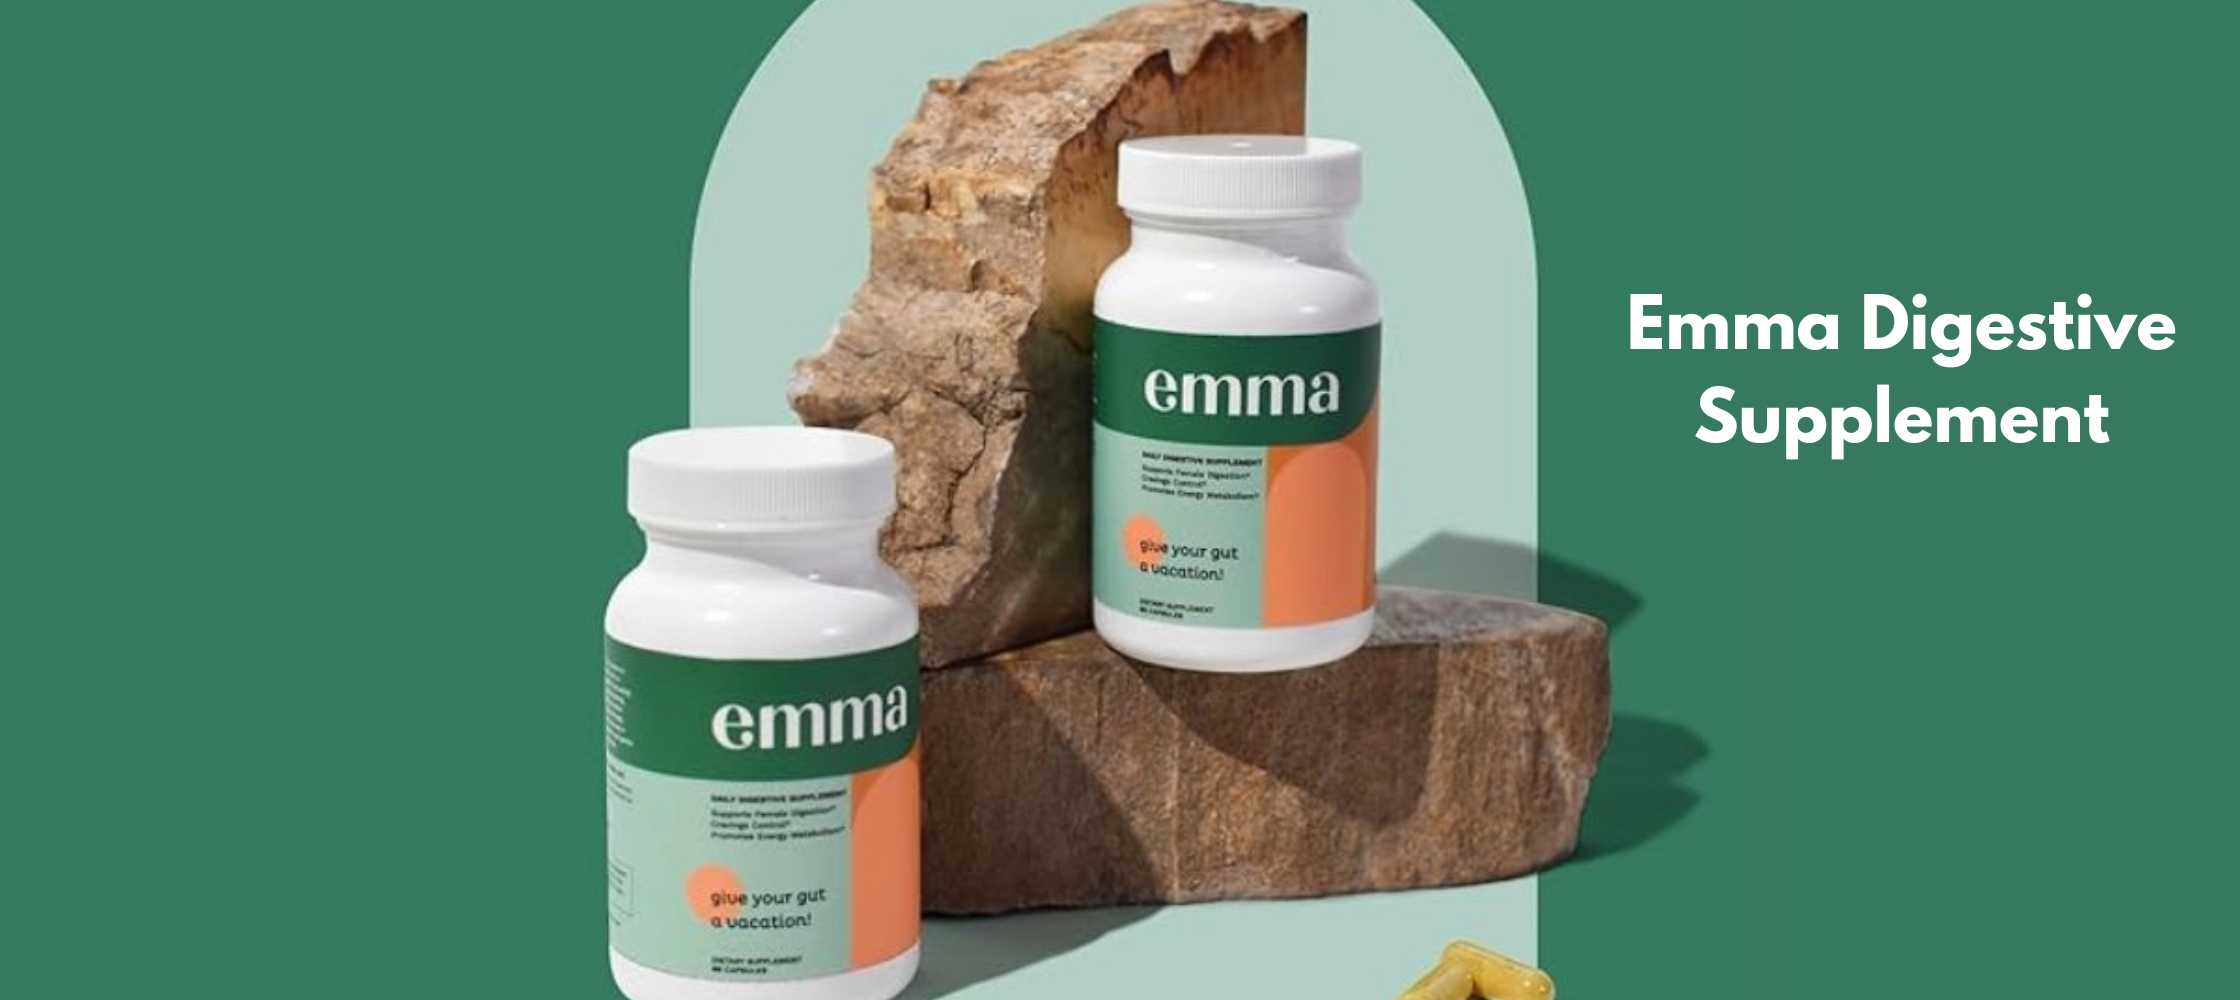 Emma Digestive Supplement